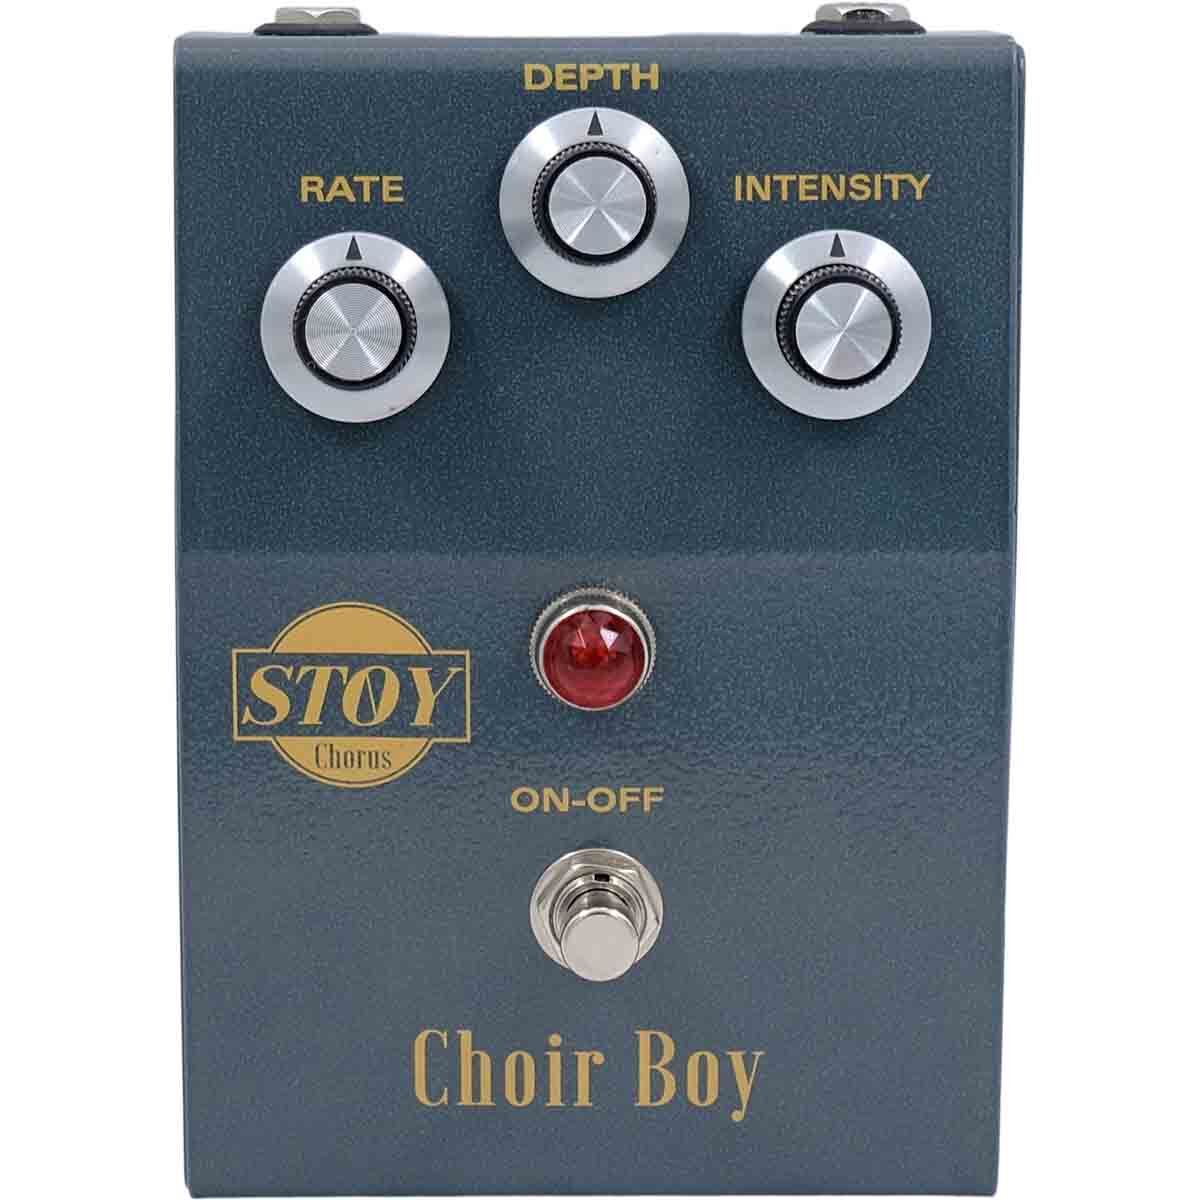 Stoy Choir Boy chorus-pedal